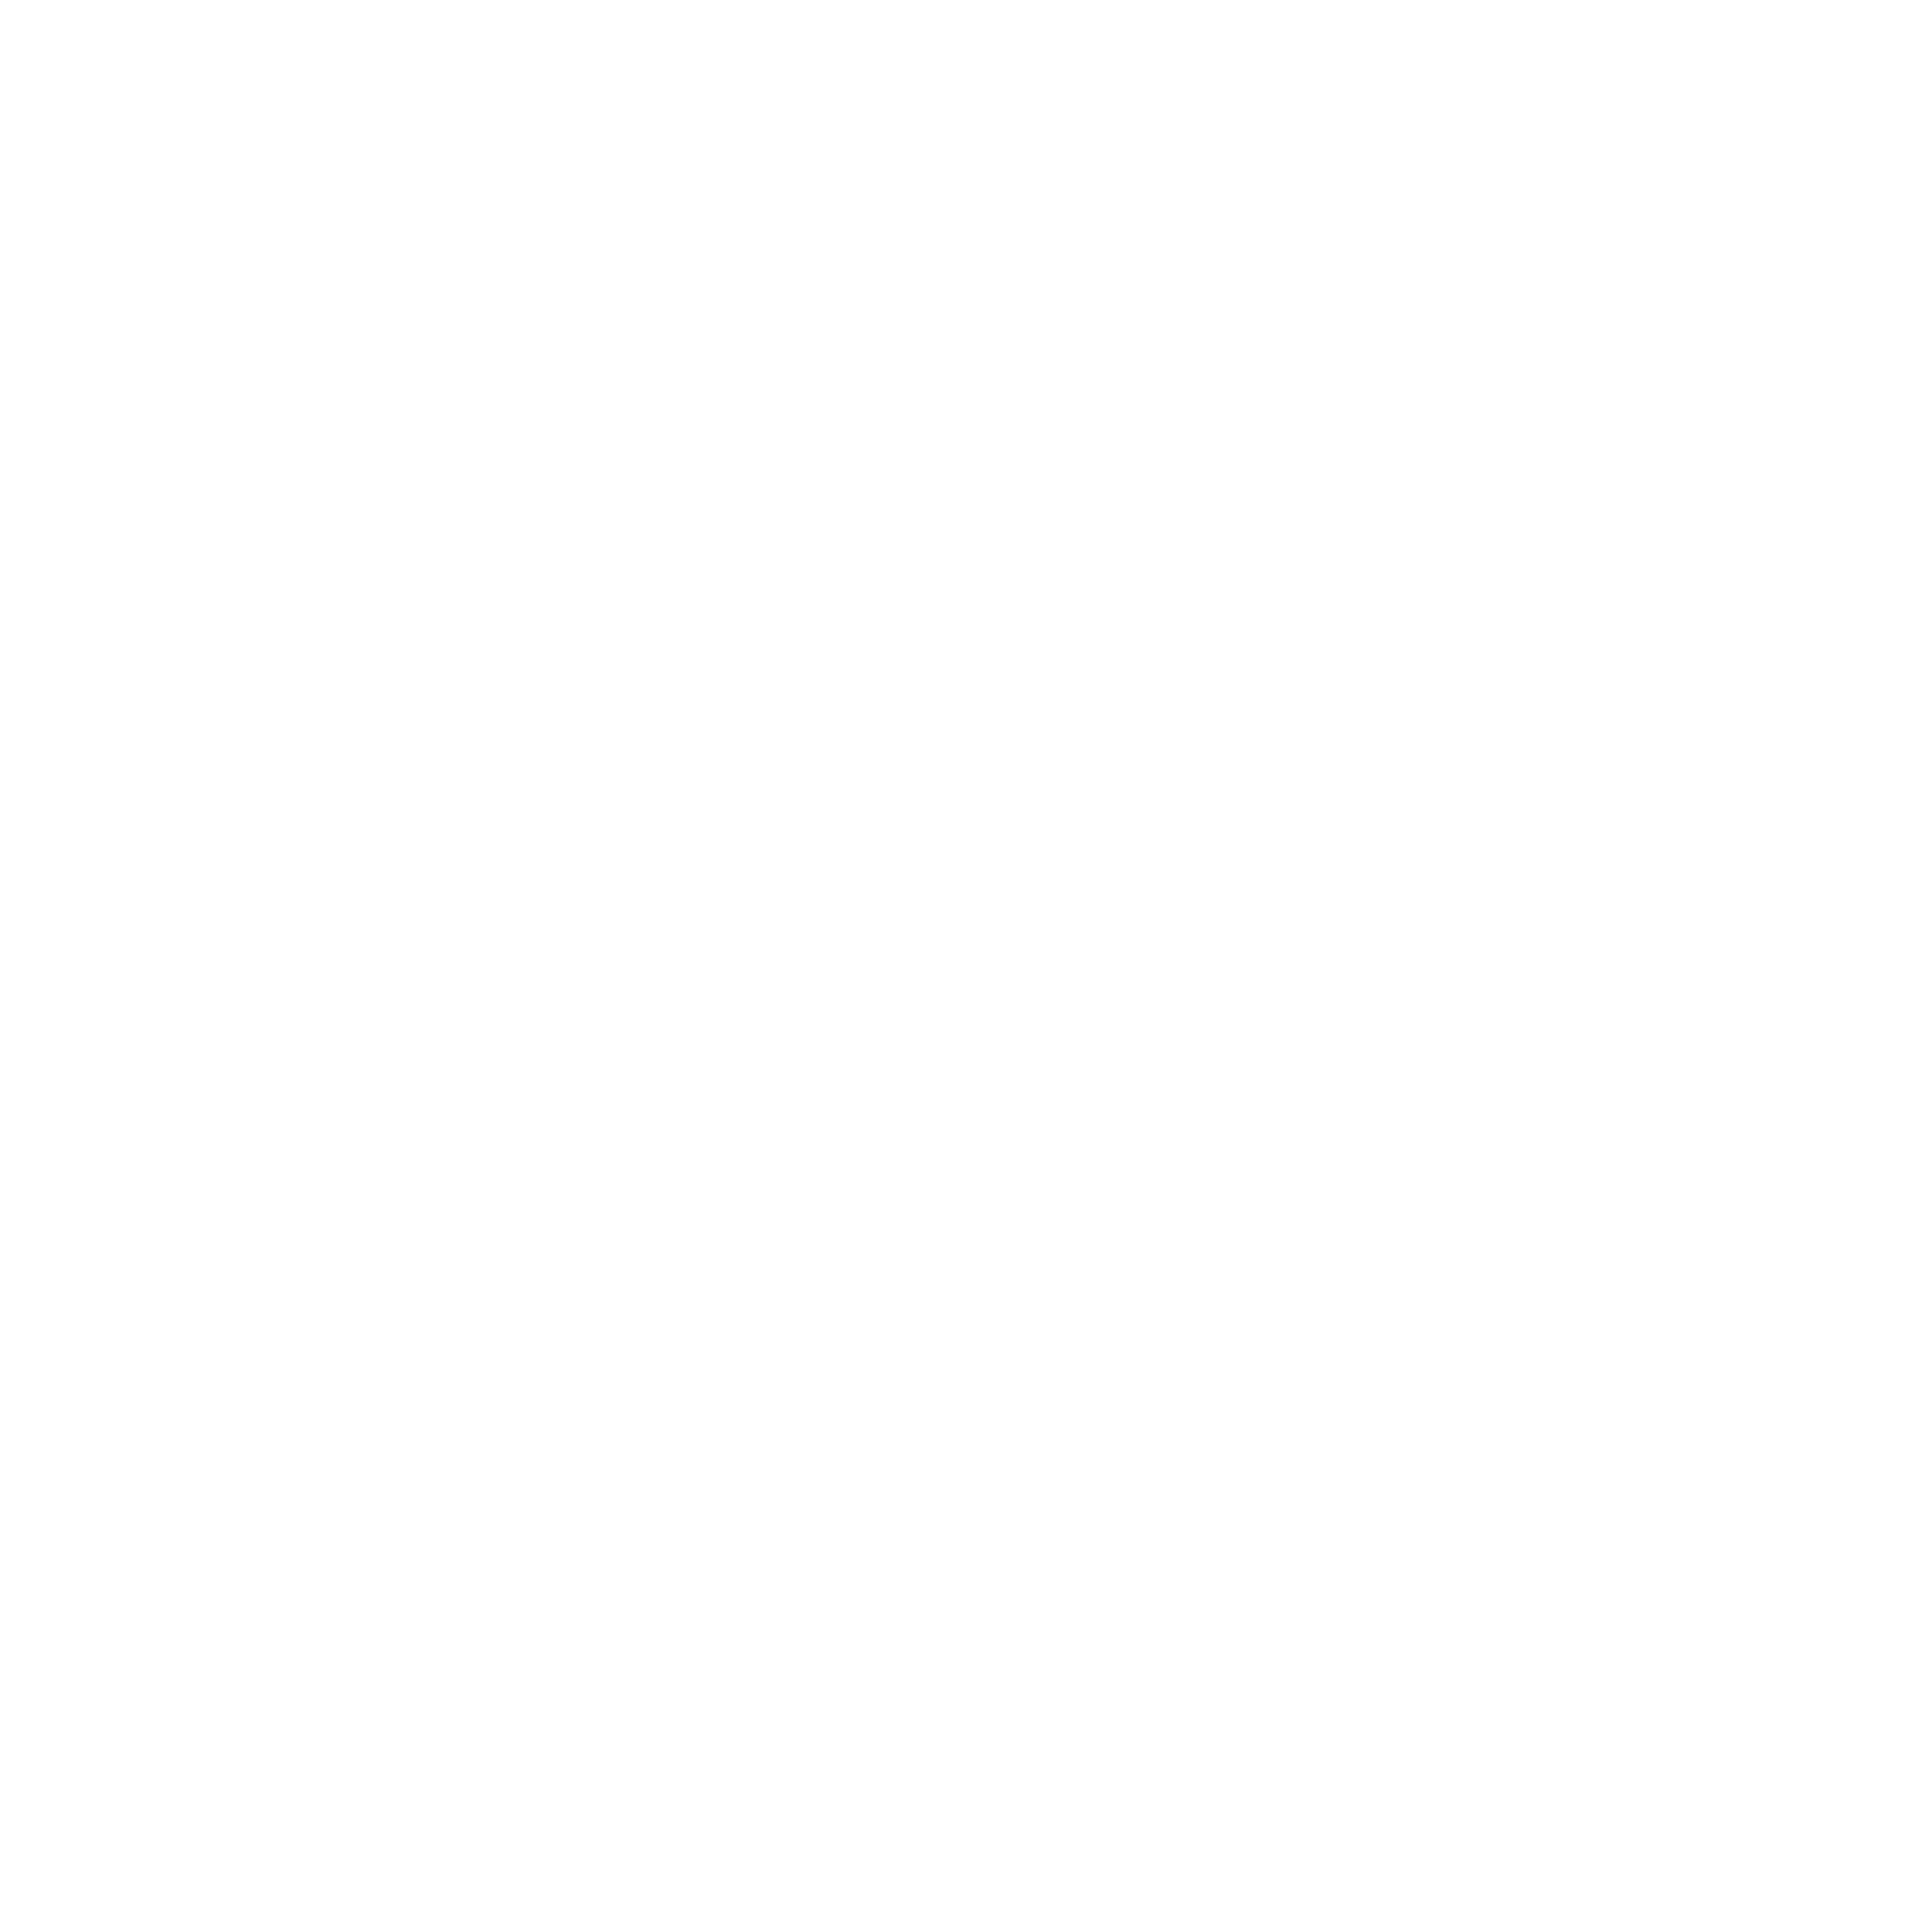 Josh Hassell